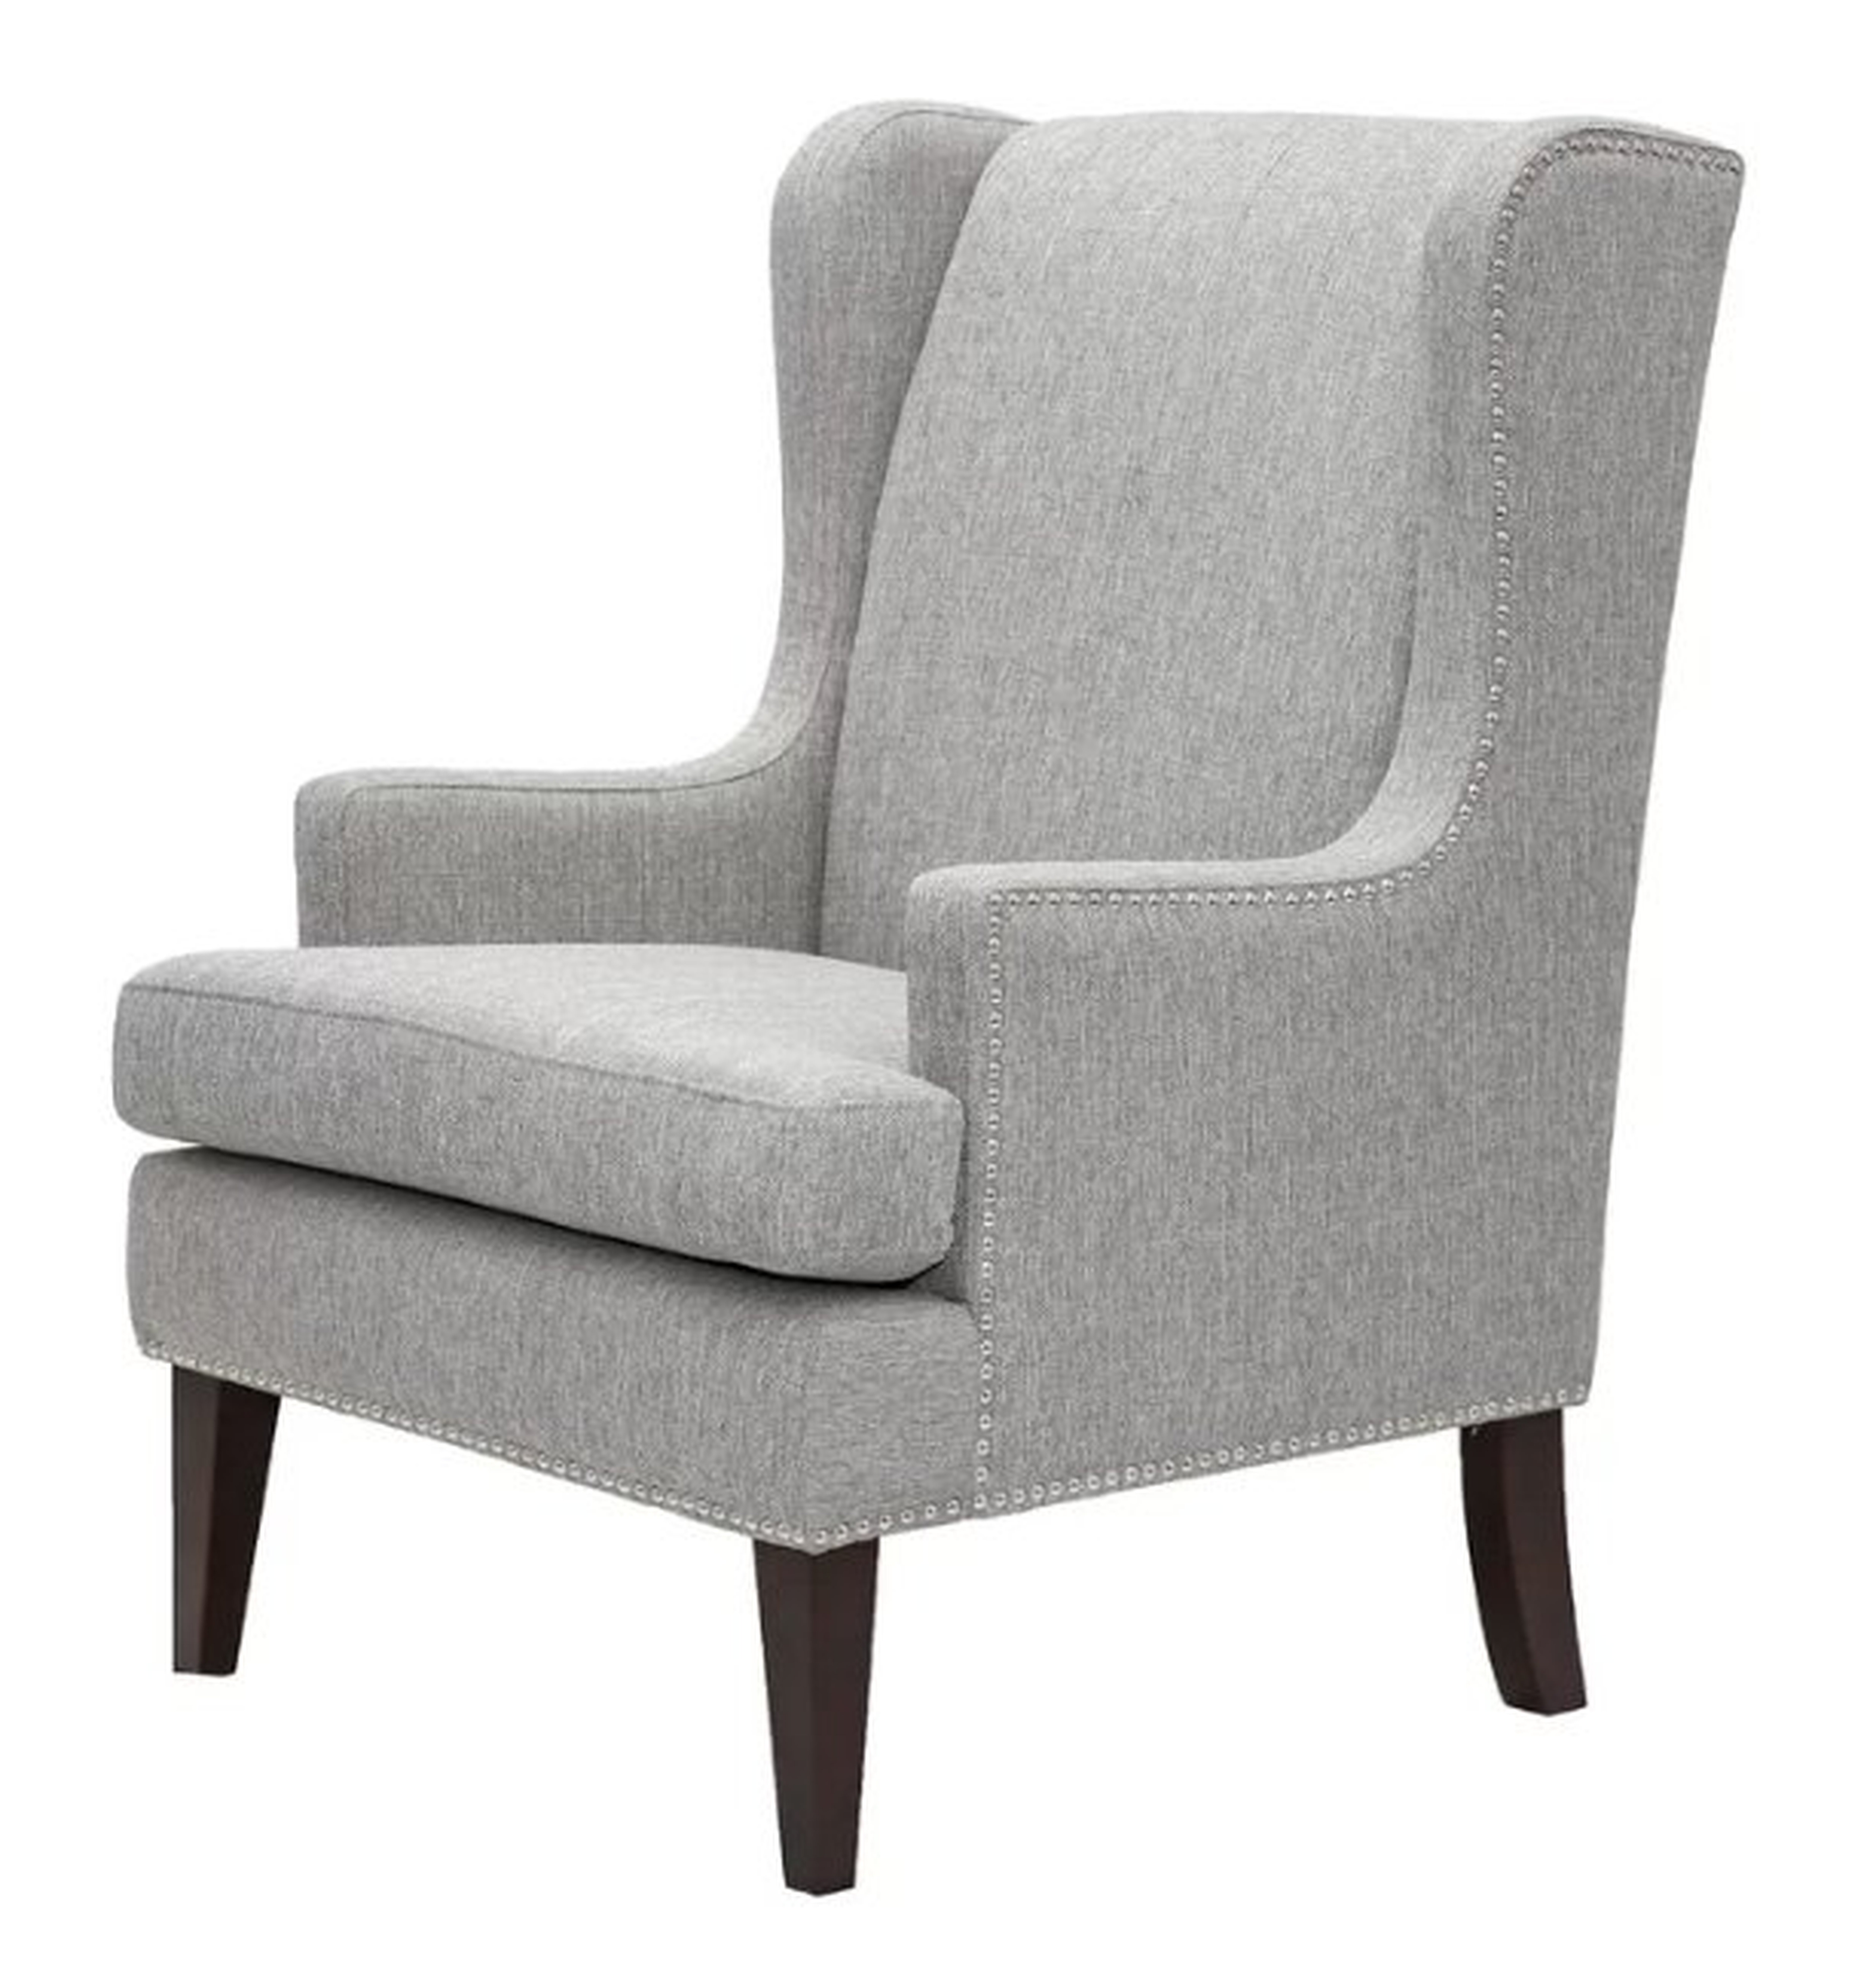 Apple Valley Wingback Chair in Gray - Wayfair